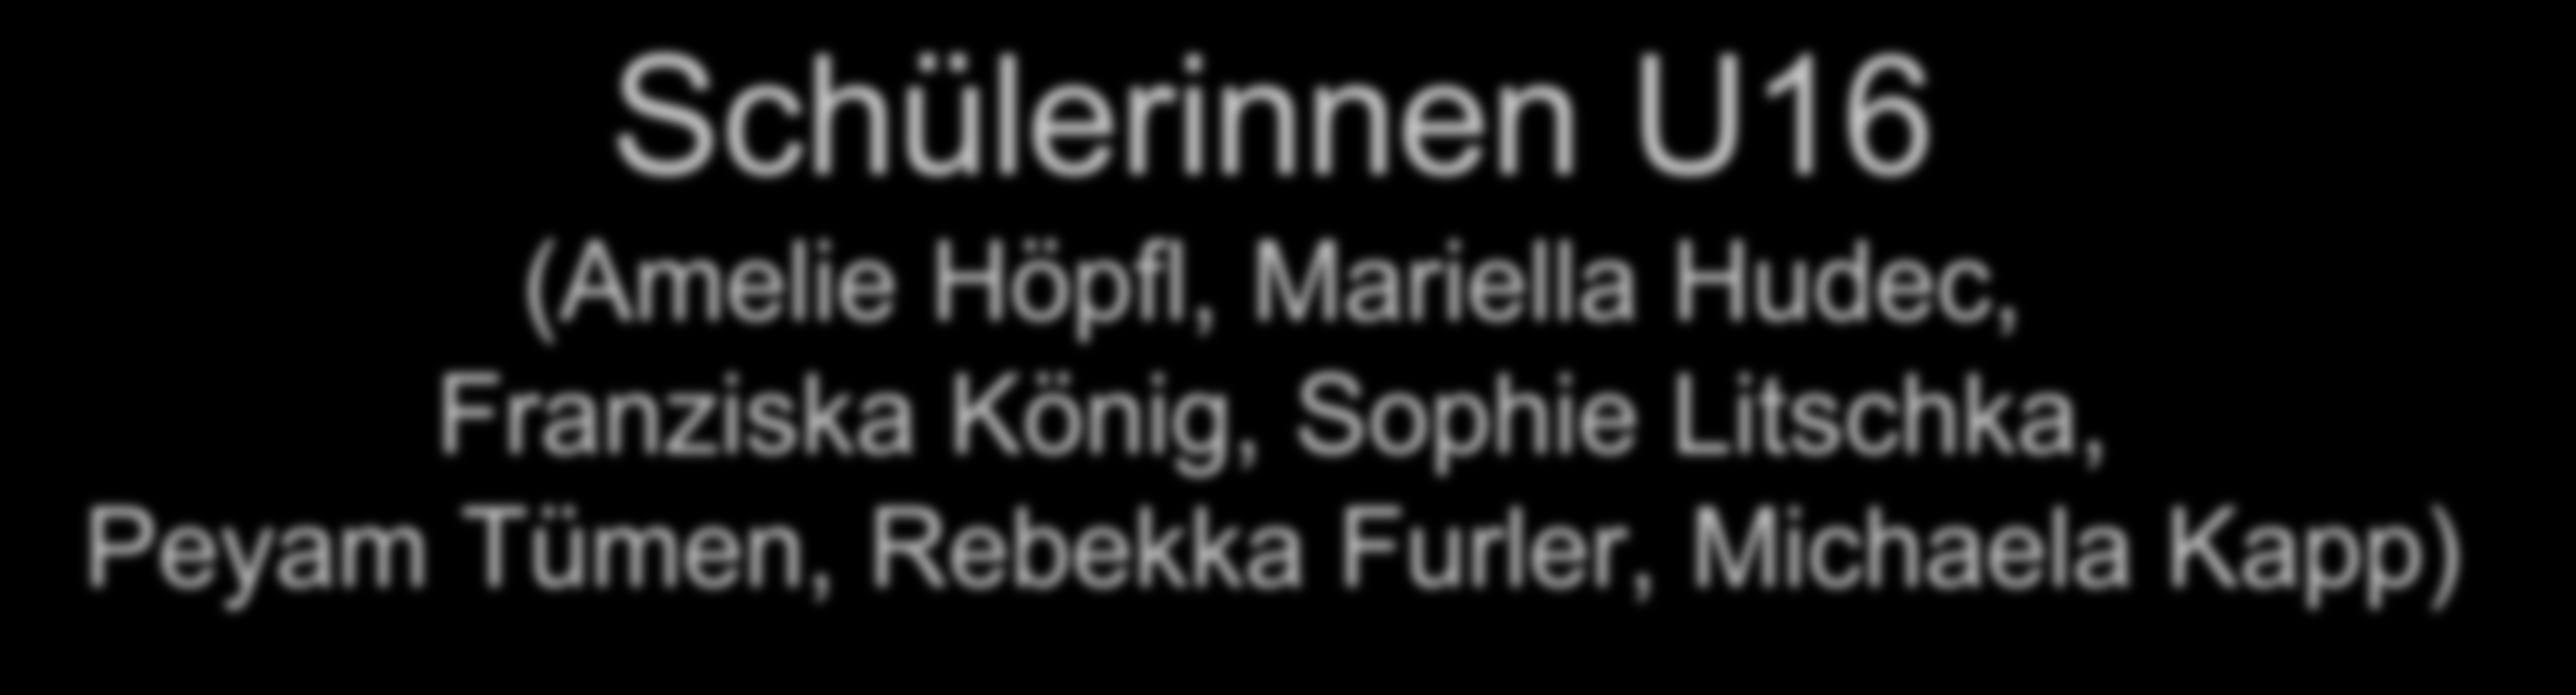 Schülerinnen U16 (Amelie Höpfl, Mariella Hudec, Franziska König, Sophie Litschka, Peyam Tümen, Rebekka